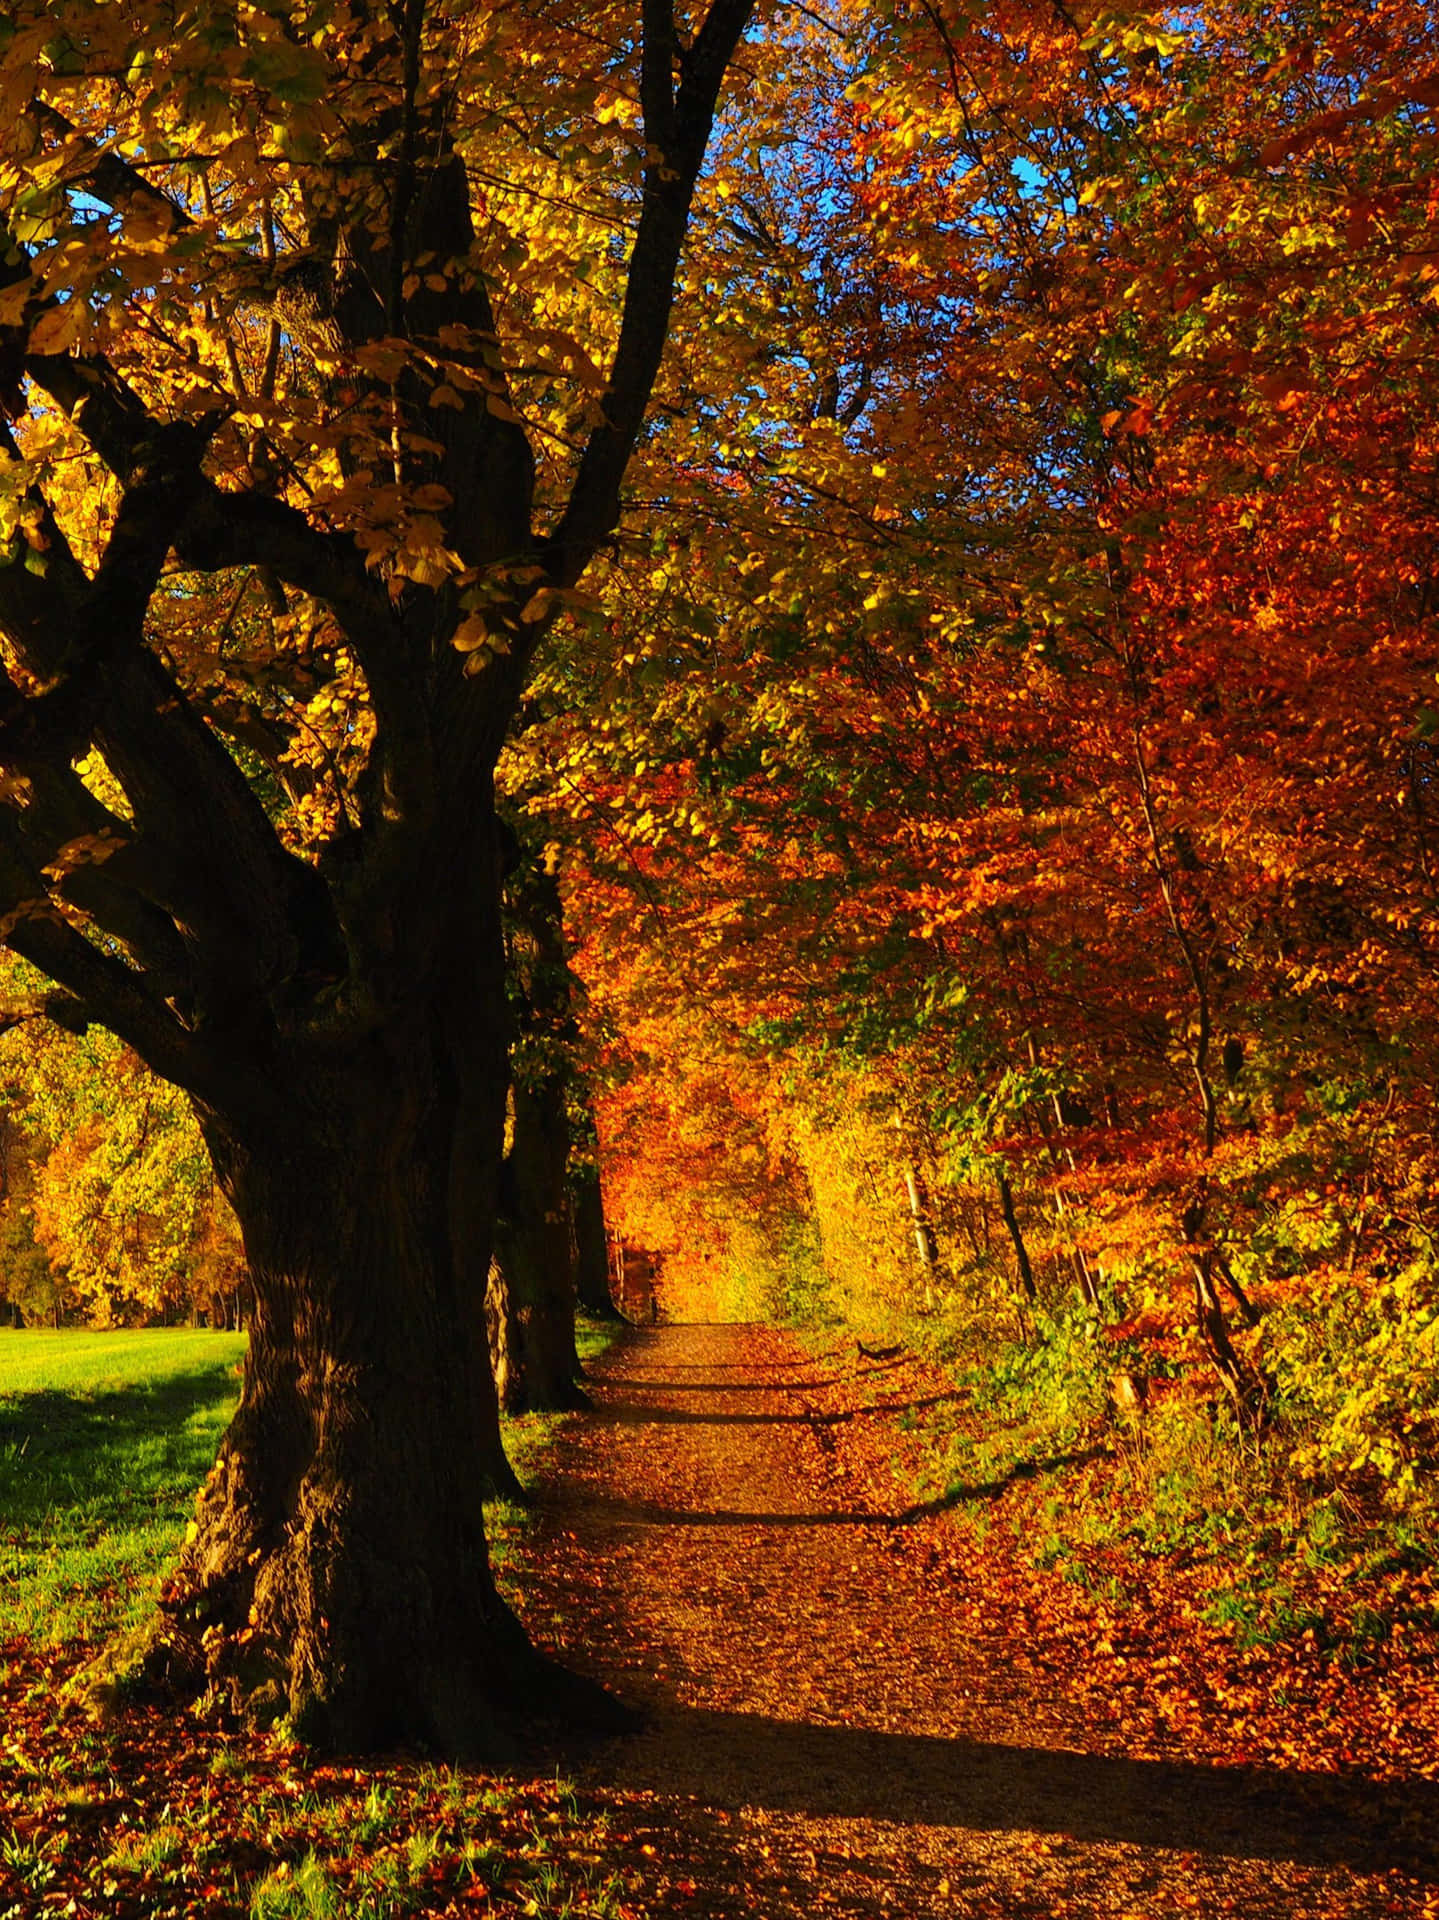 Fall Forest Scenery in Full Bloom Wallpaper